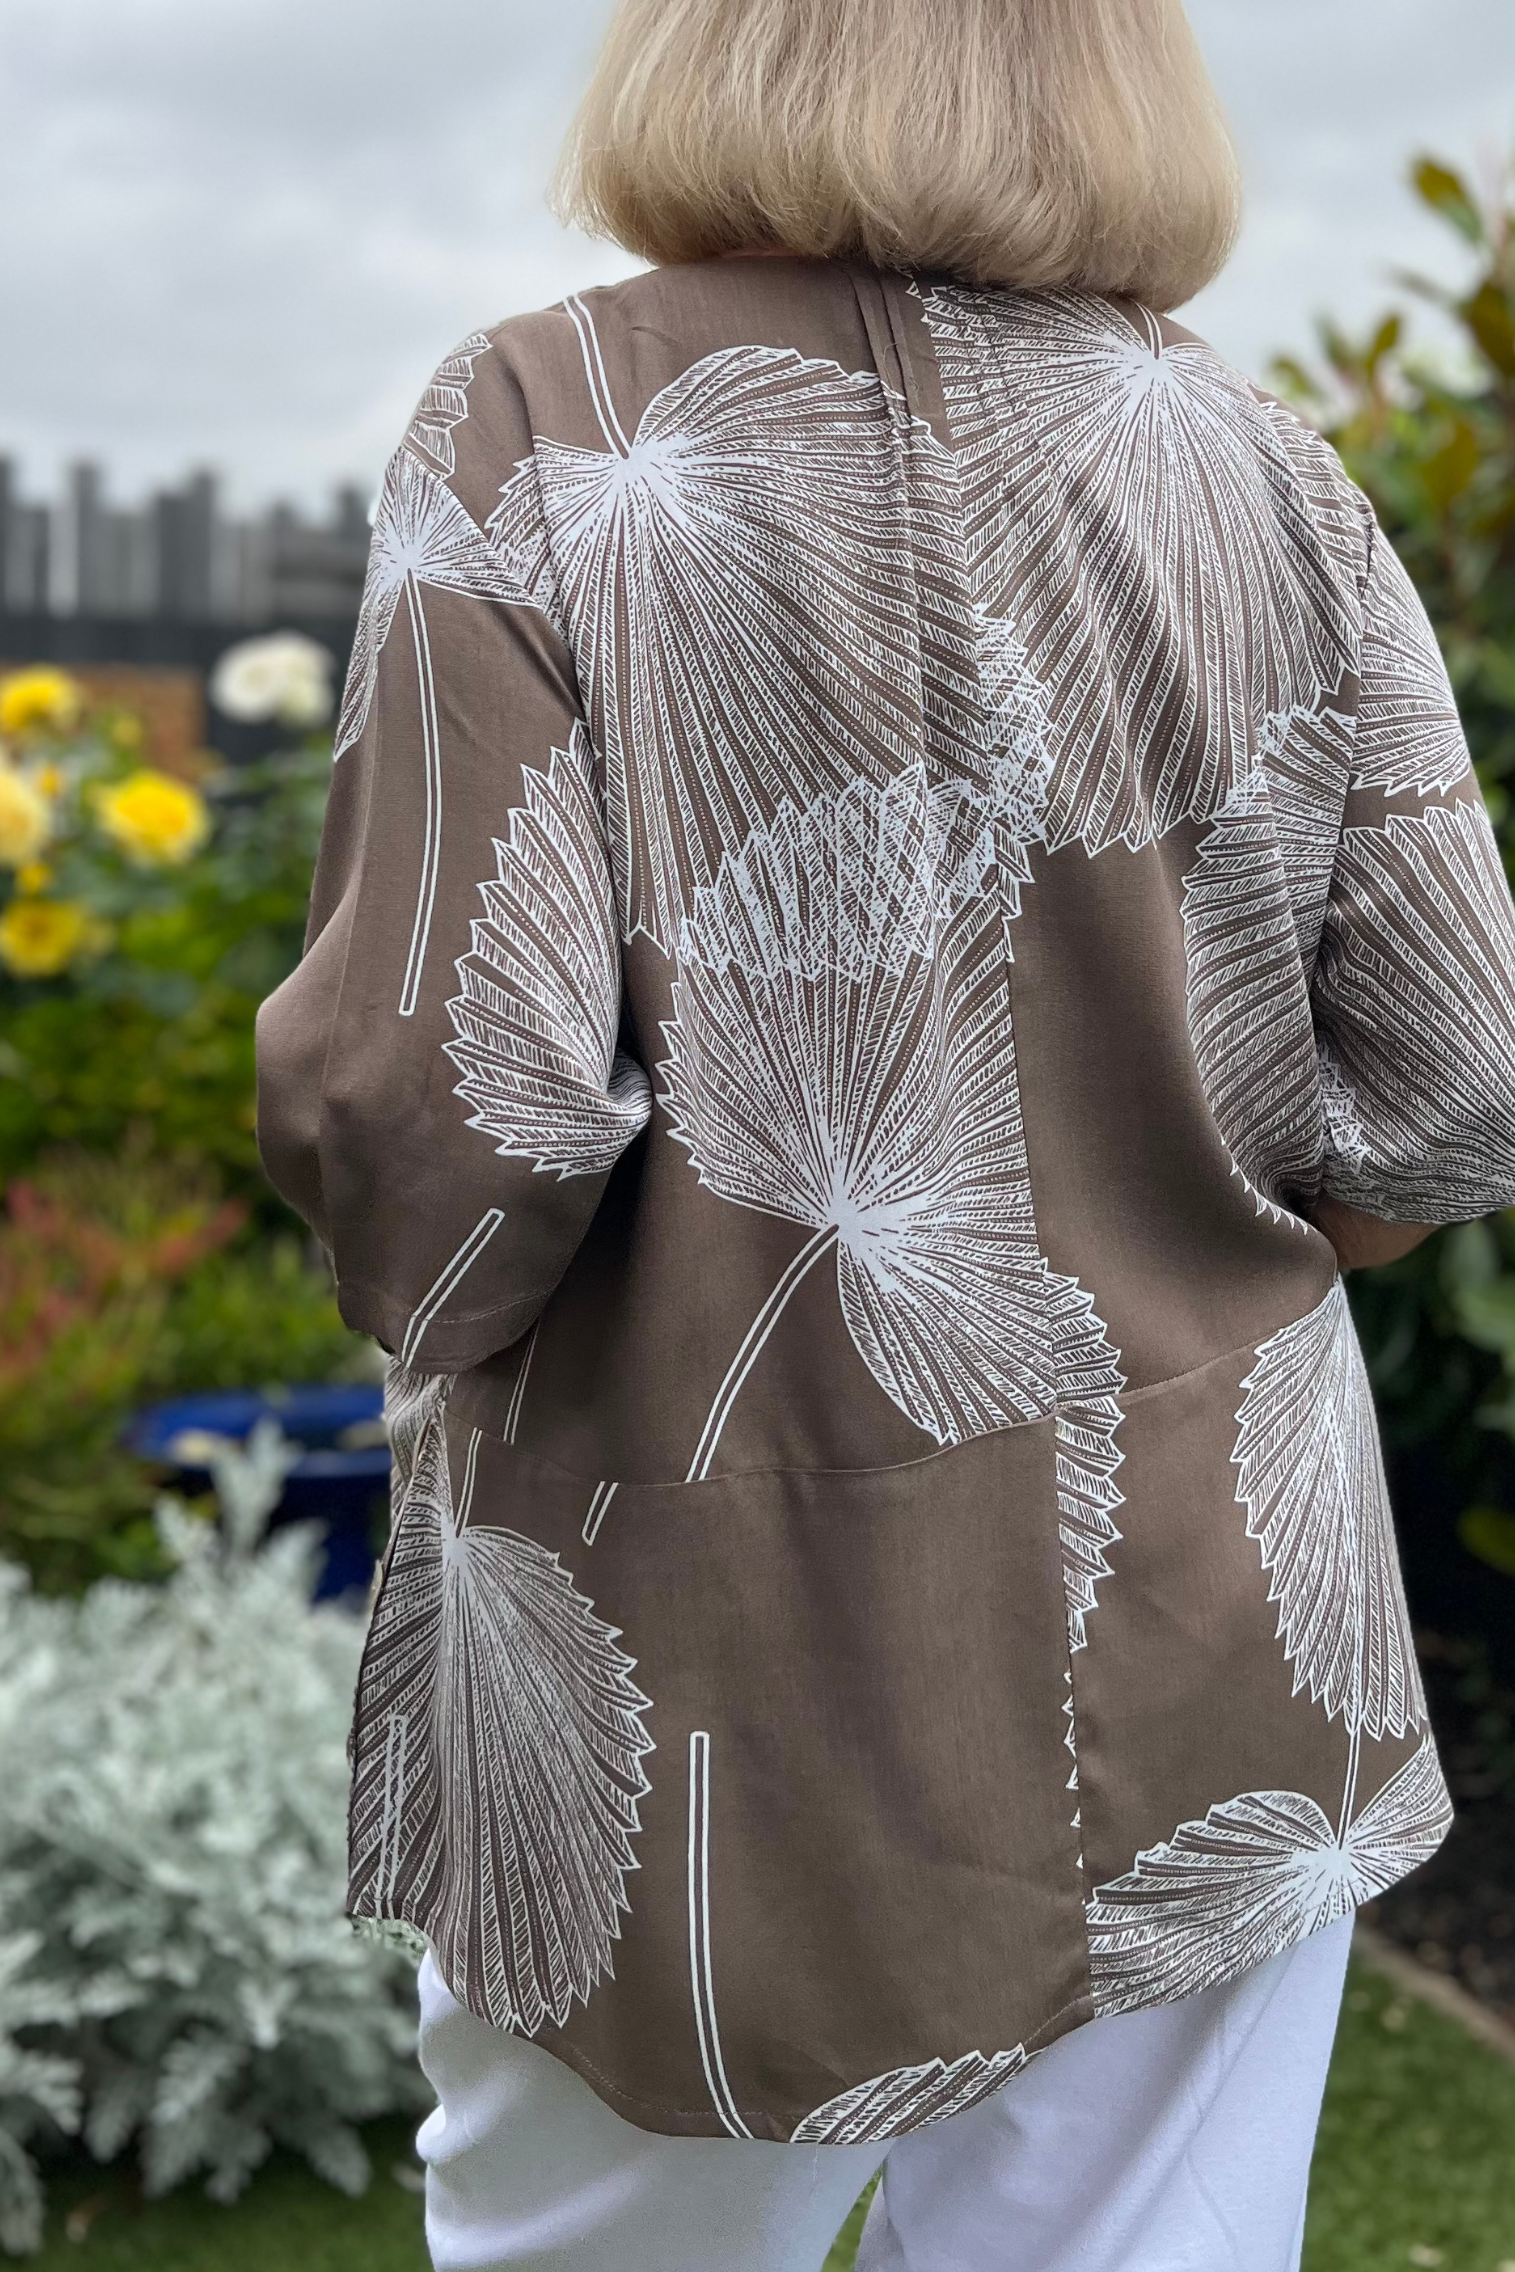 Kita Ku model wearing a mocha and white large fan palm leaf printed top over white pants